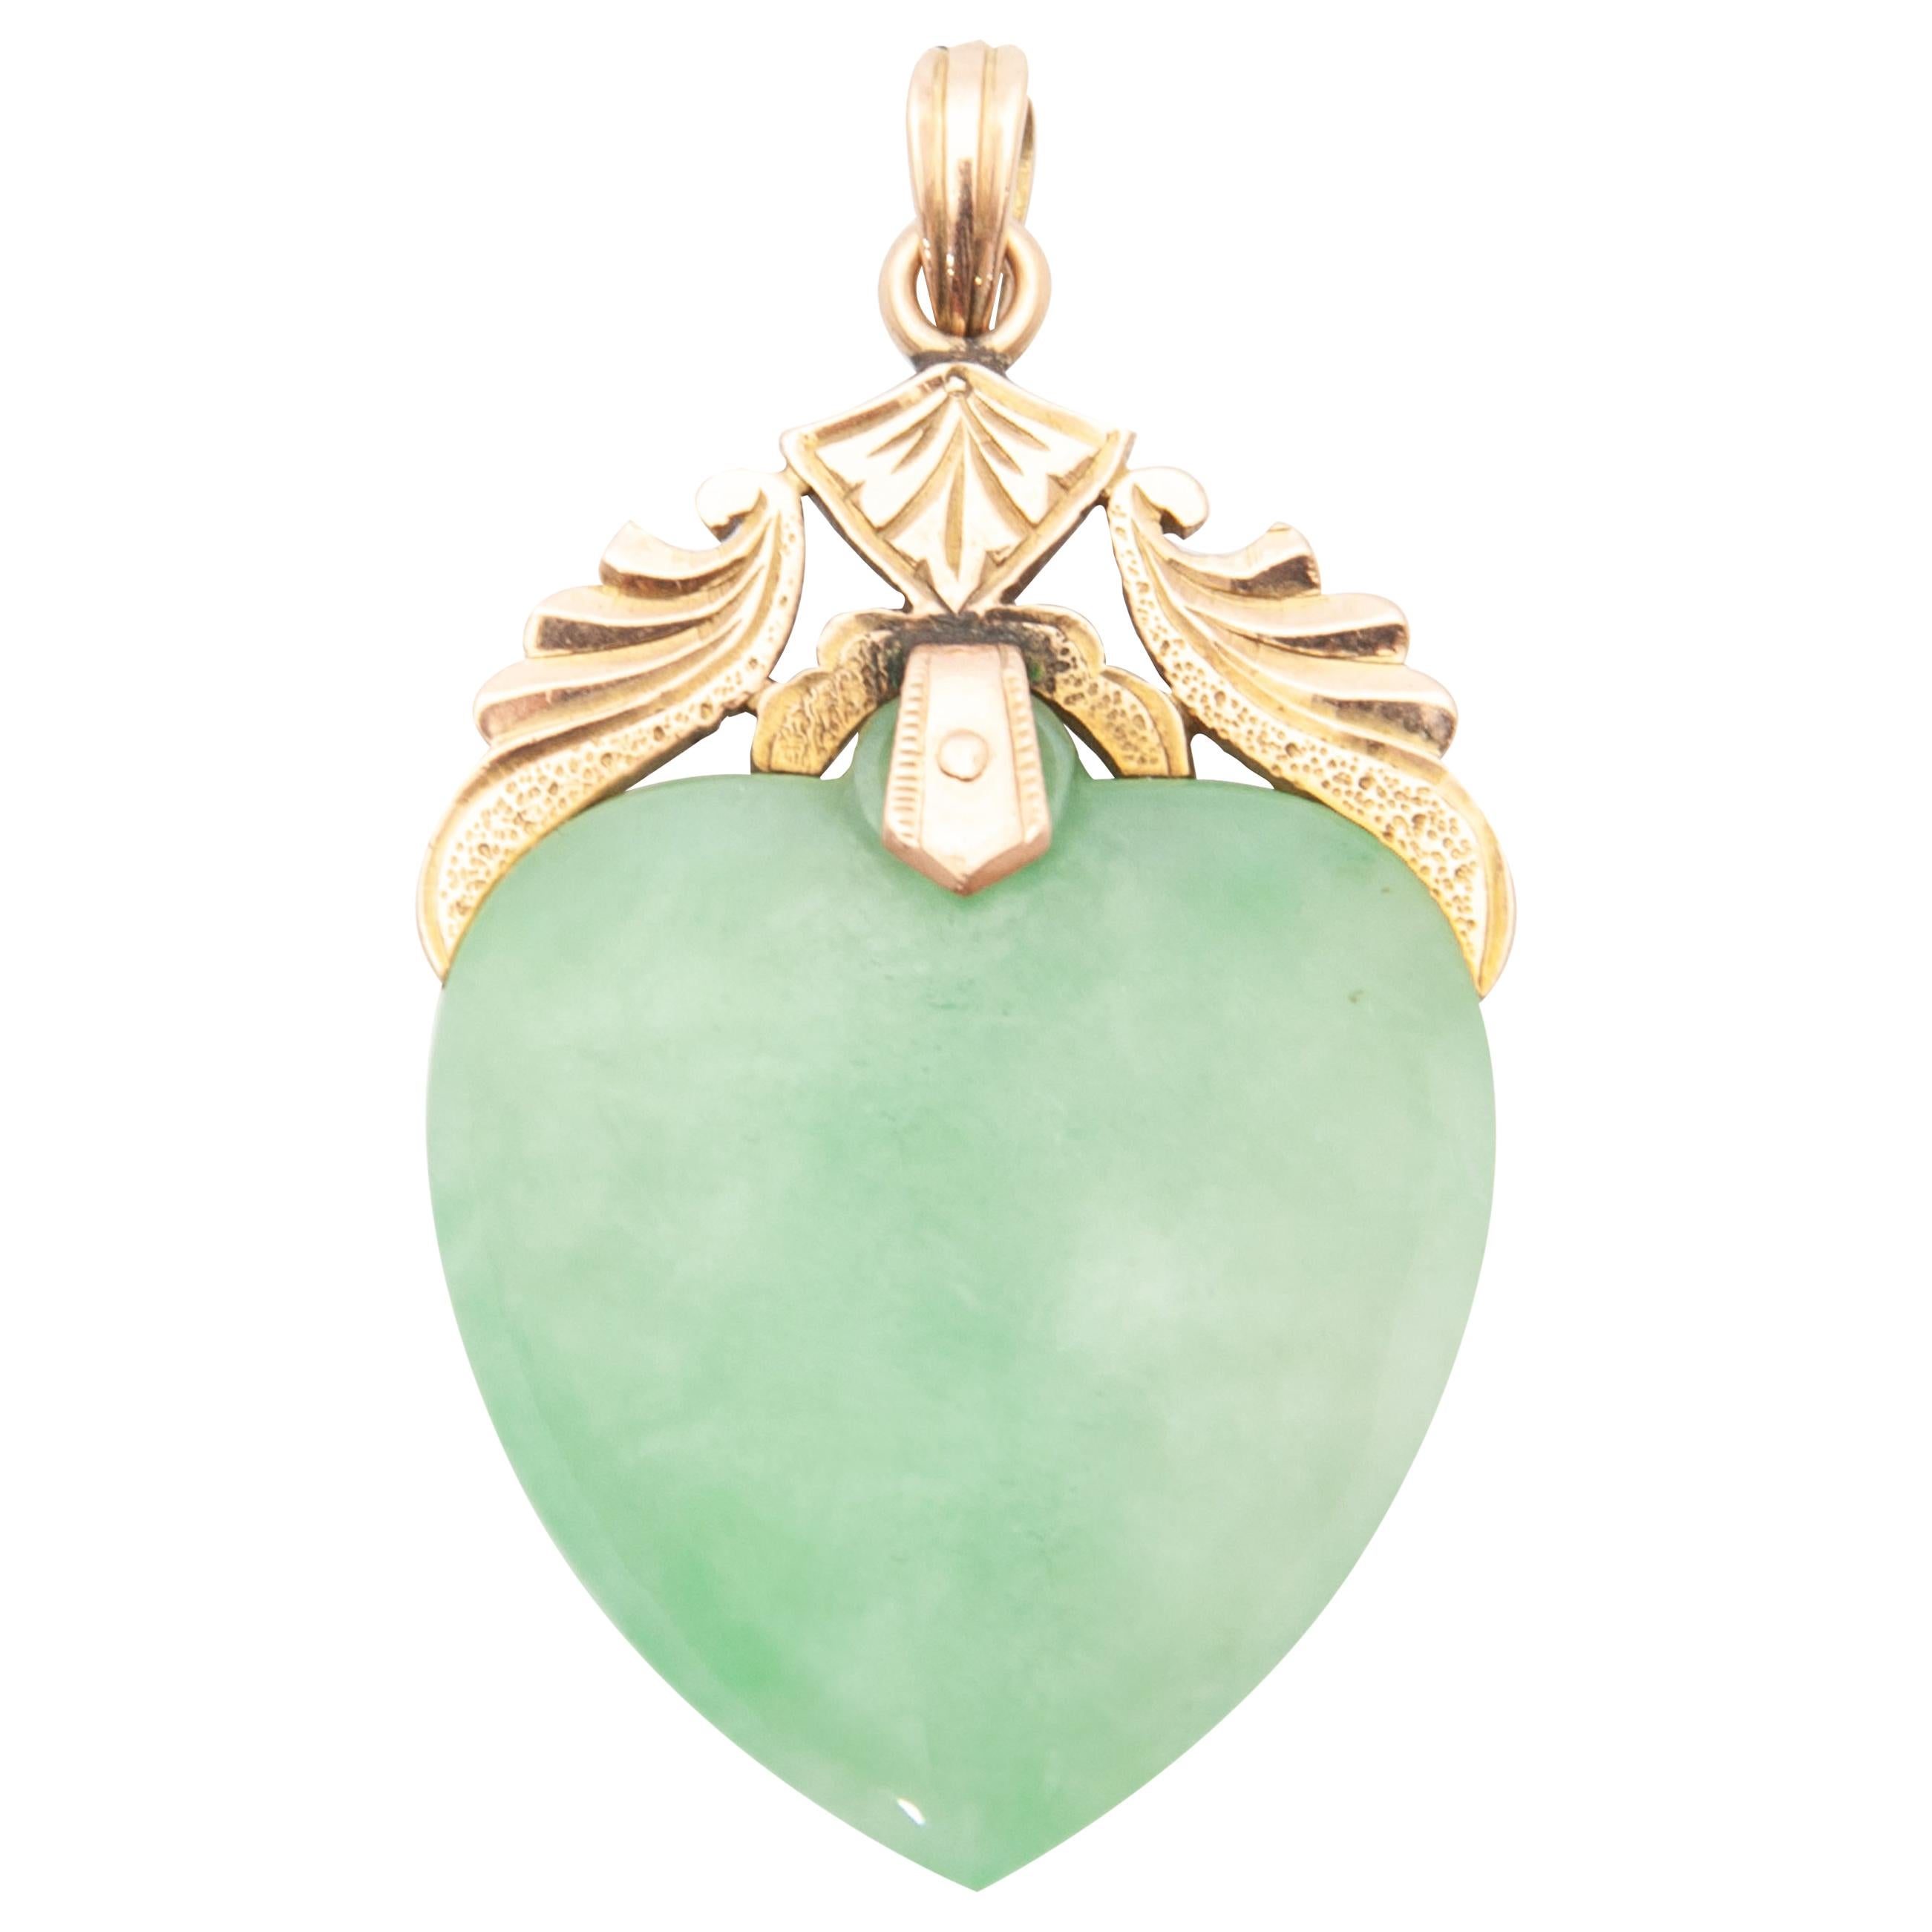  Vintage Gold Heart Shape Jade Love Pendant